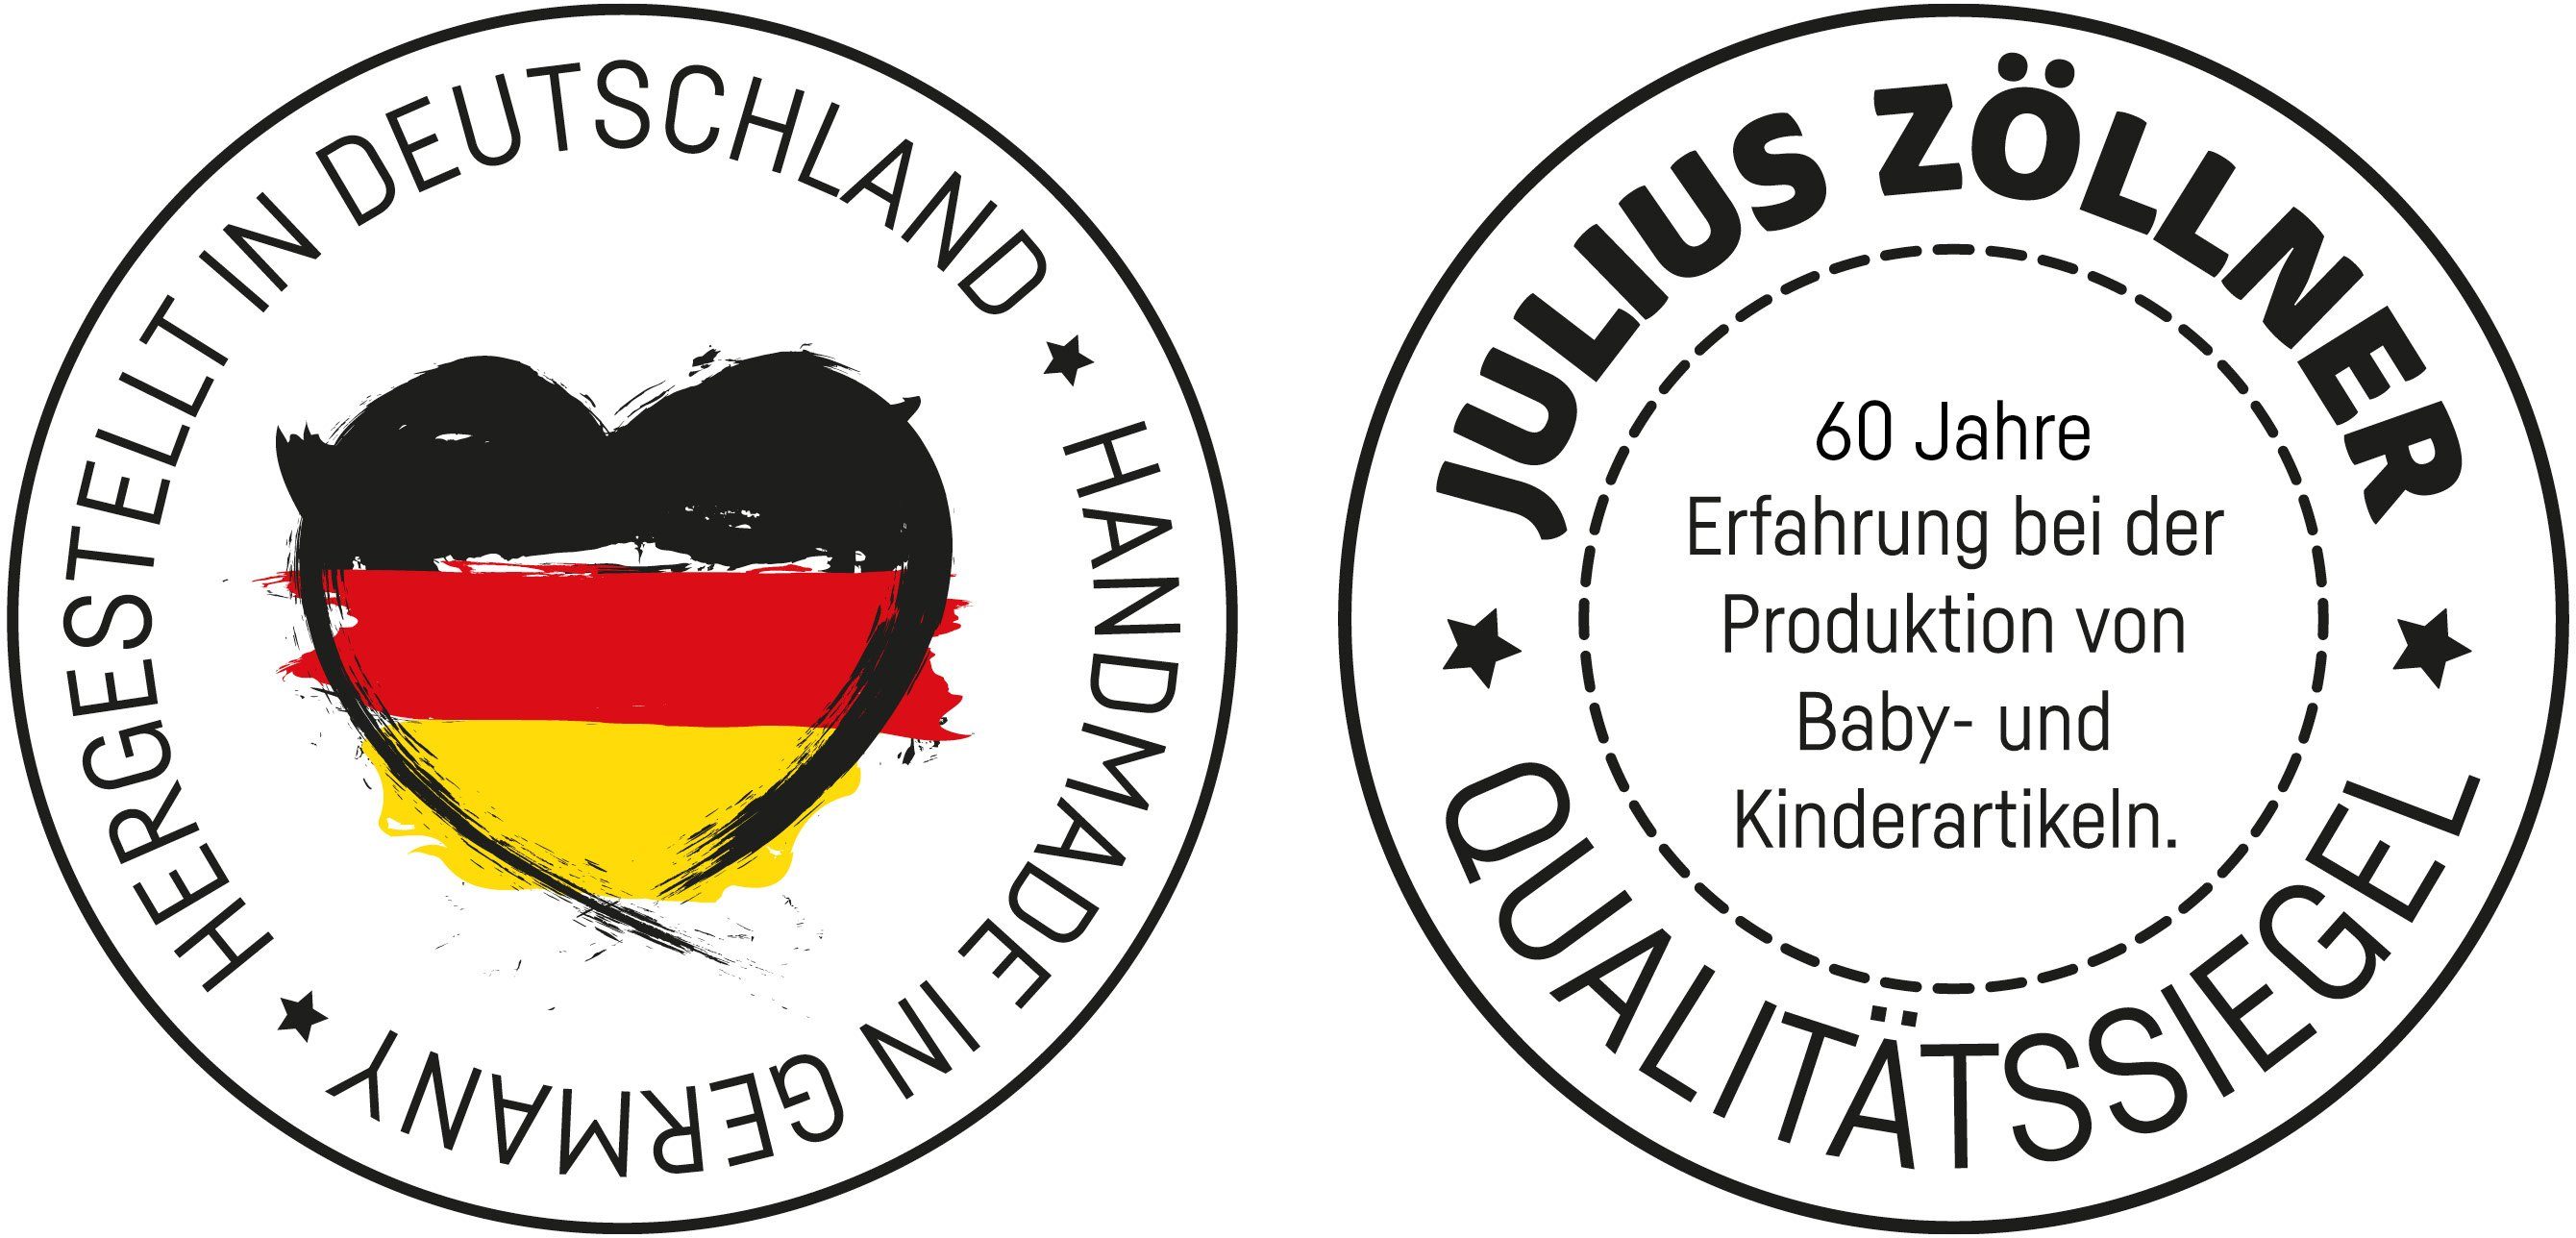 Julius Zöllner Wickelauflage 2-Keil, Grey Stripes, Made Germany in